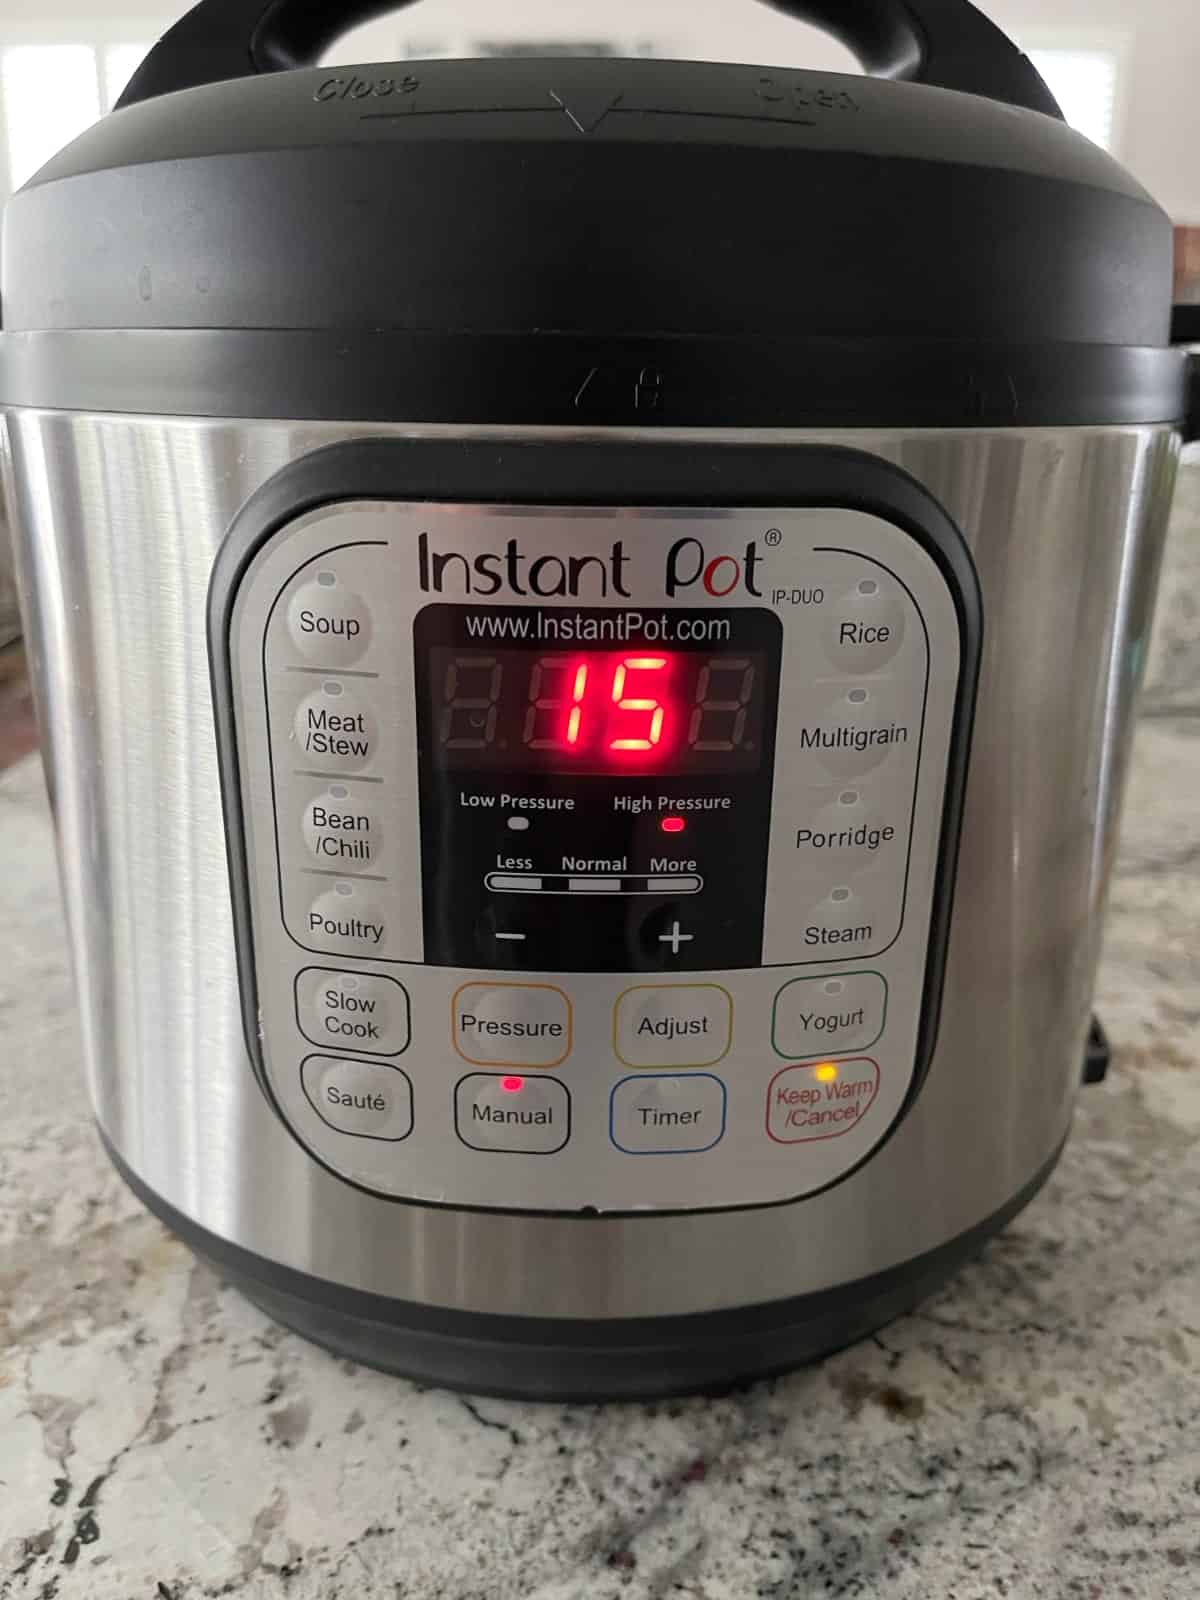 Instant Pot set on High Pressure for 15 minutes.